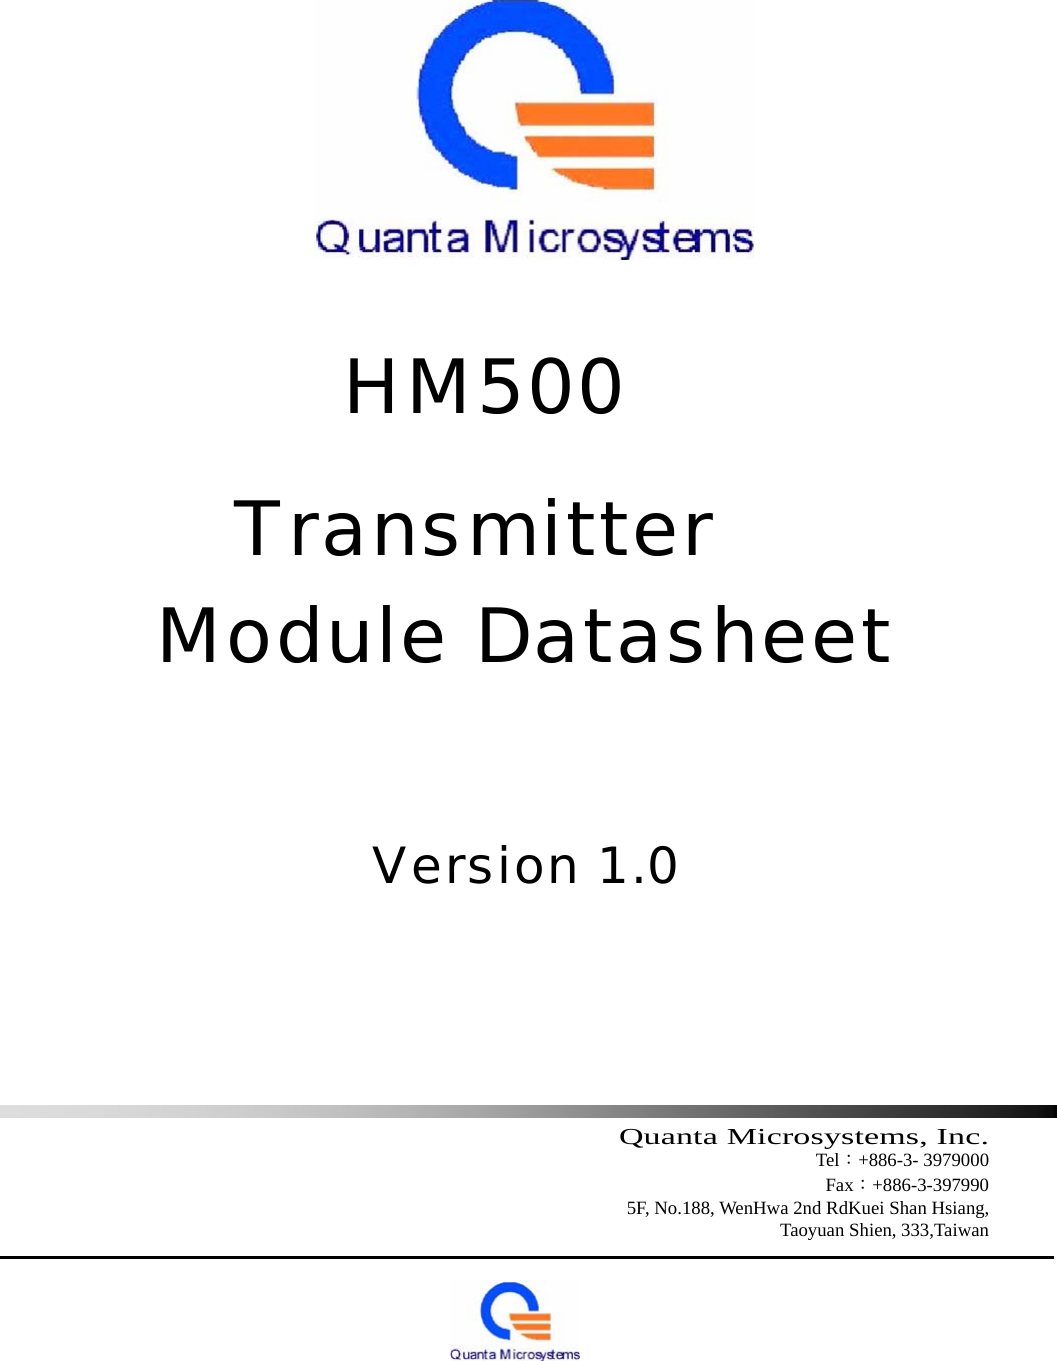                  HM500     Transmitter  Module Datasheet         Version 1.0            Quanta Microsystems, Inc.                                                                                    Tel：+886-3- 3979000     Fax：+886-3-397990 5F, No.188, WenHwa 2nd RdKuei Shan Hsiang,   Taoyuan Shien, 333,Taiwan                                                                                 